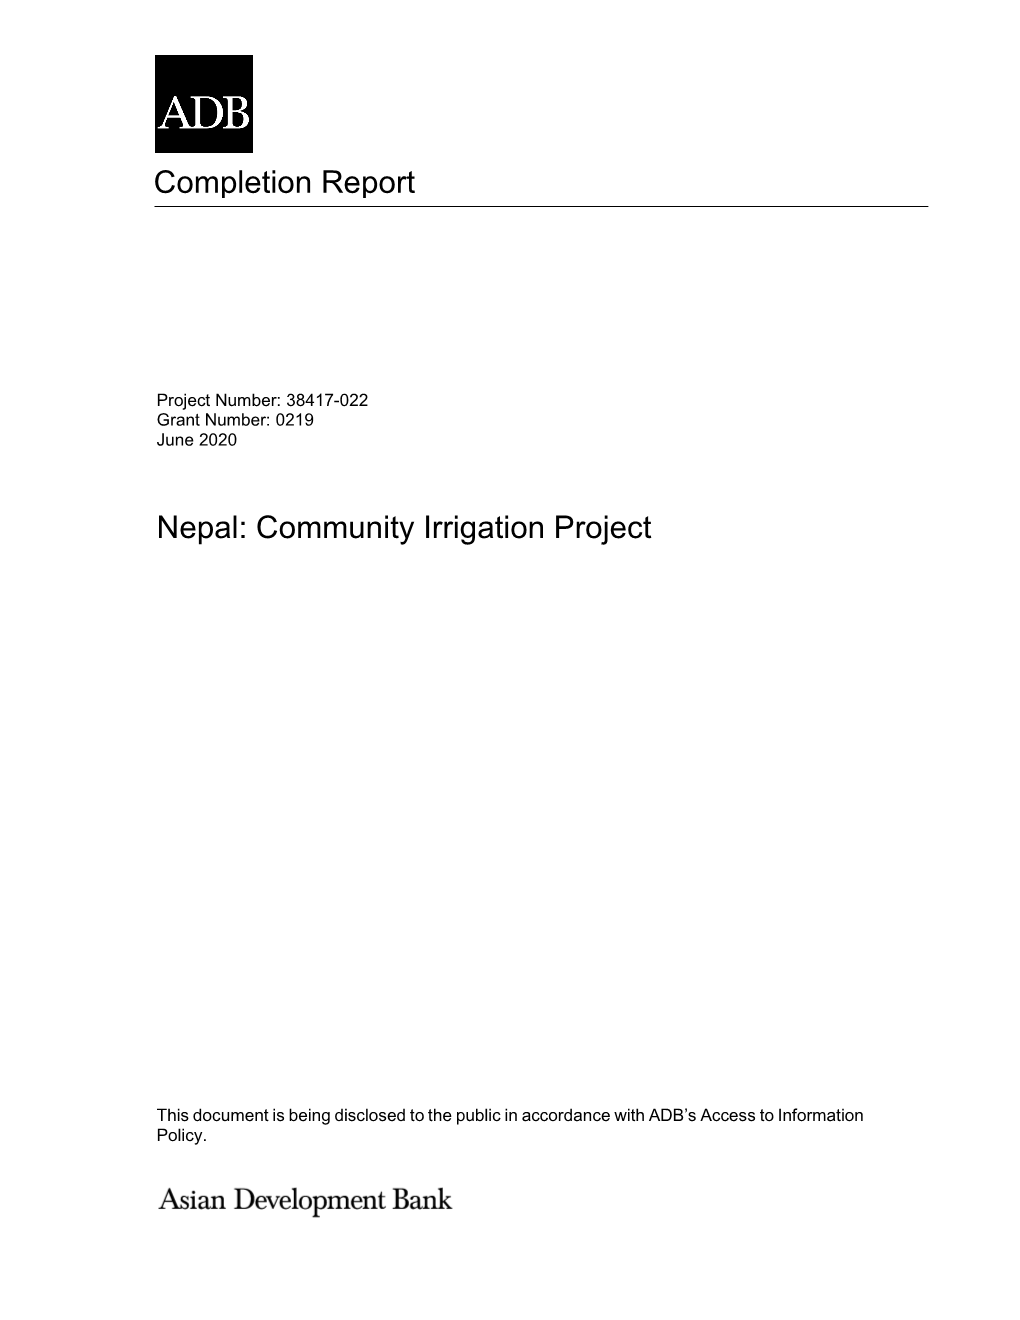 38417-022: Community Irrigation Project